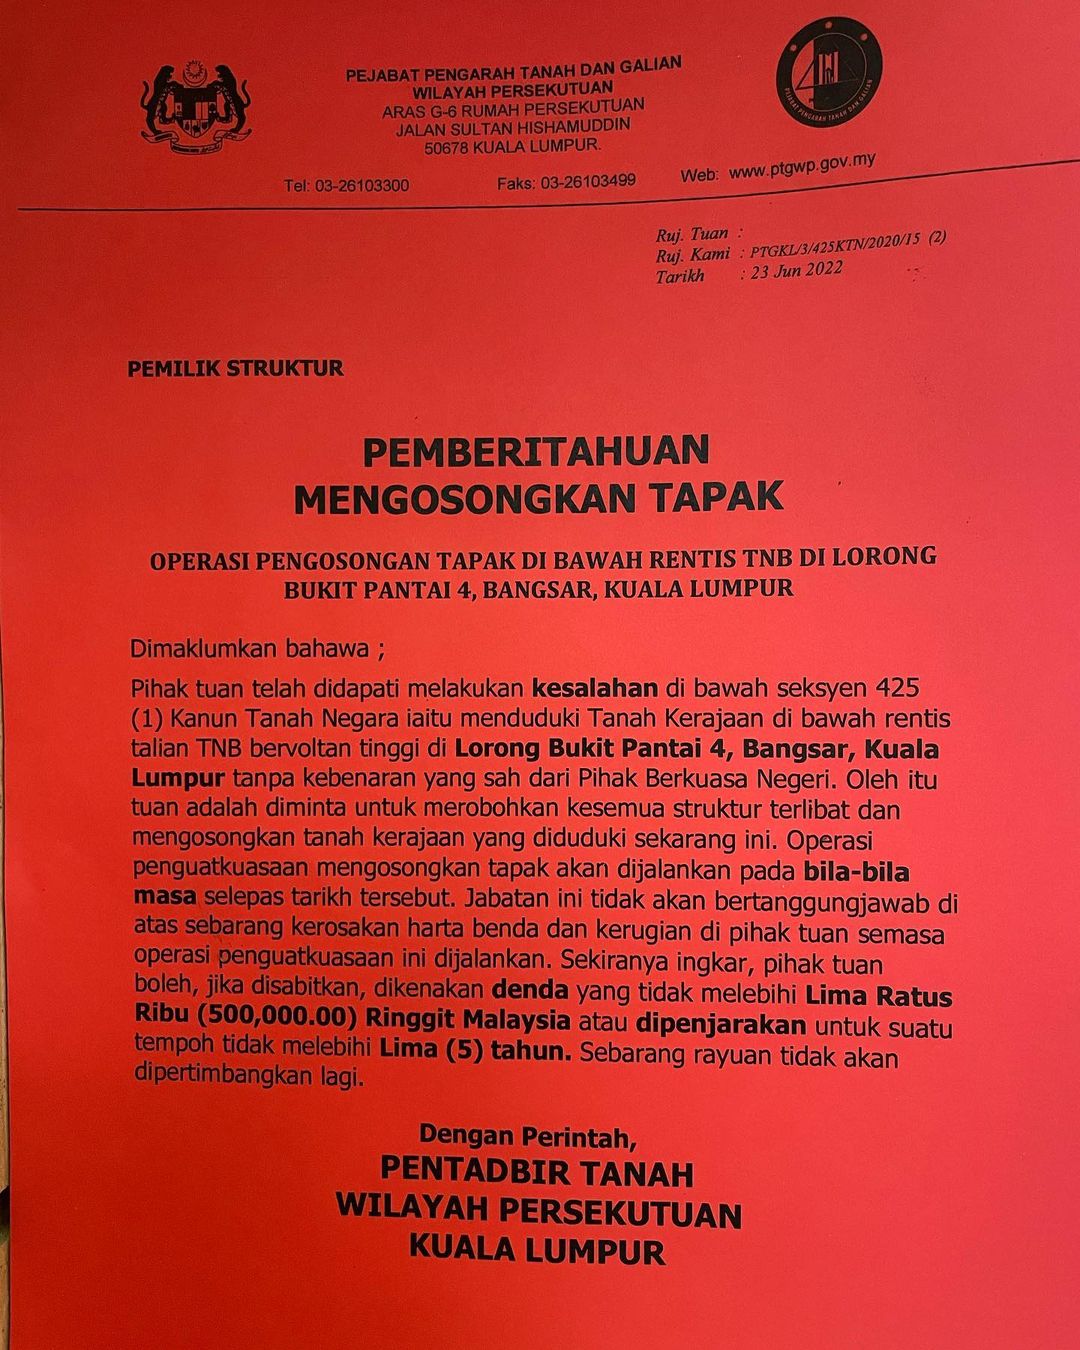 Community garden and farm Kebun-Kebun Bangsar was served an eviction notice. Image credit: kebunkebunbangsar